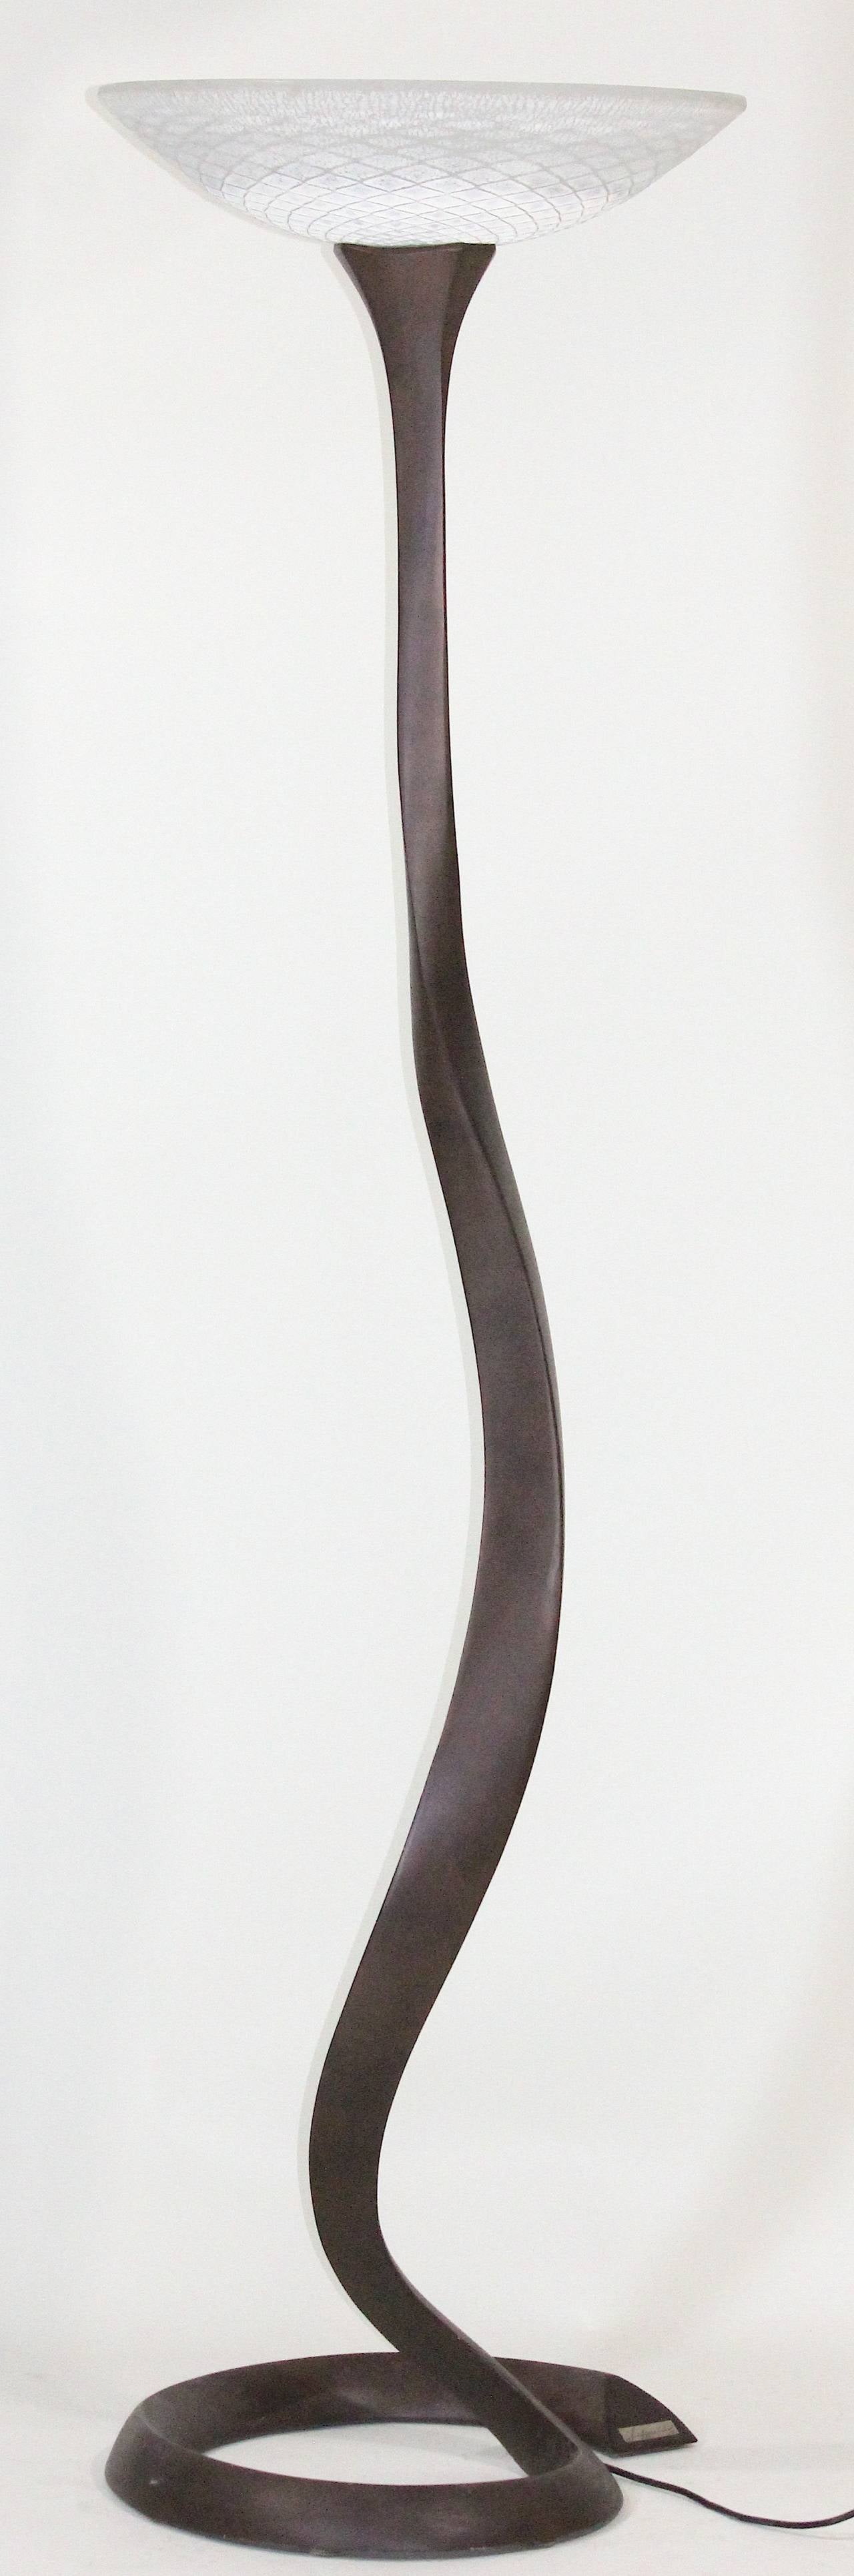 20th Century Organic Sculptural Floor Lamp Edgar Brandt manner, Daum Manner Glass Shade-Signed For Sale